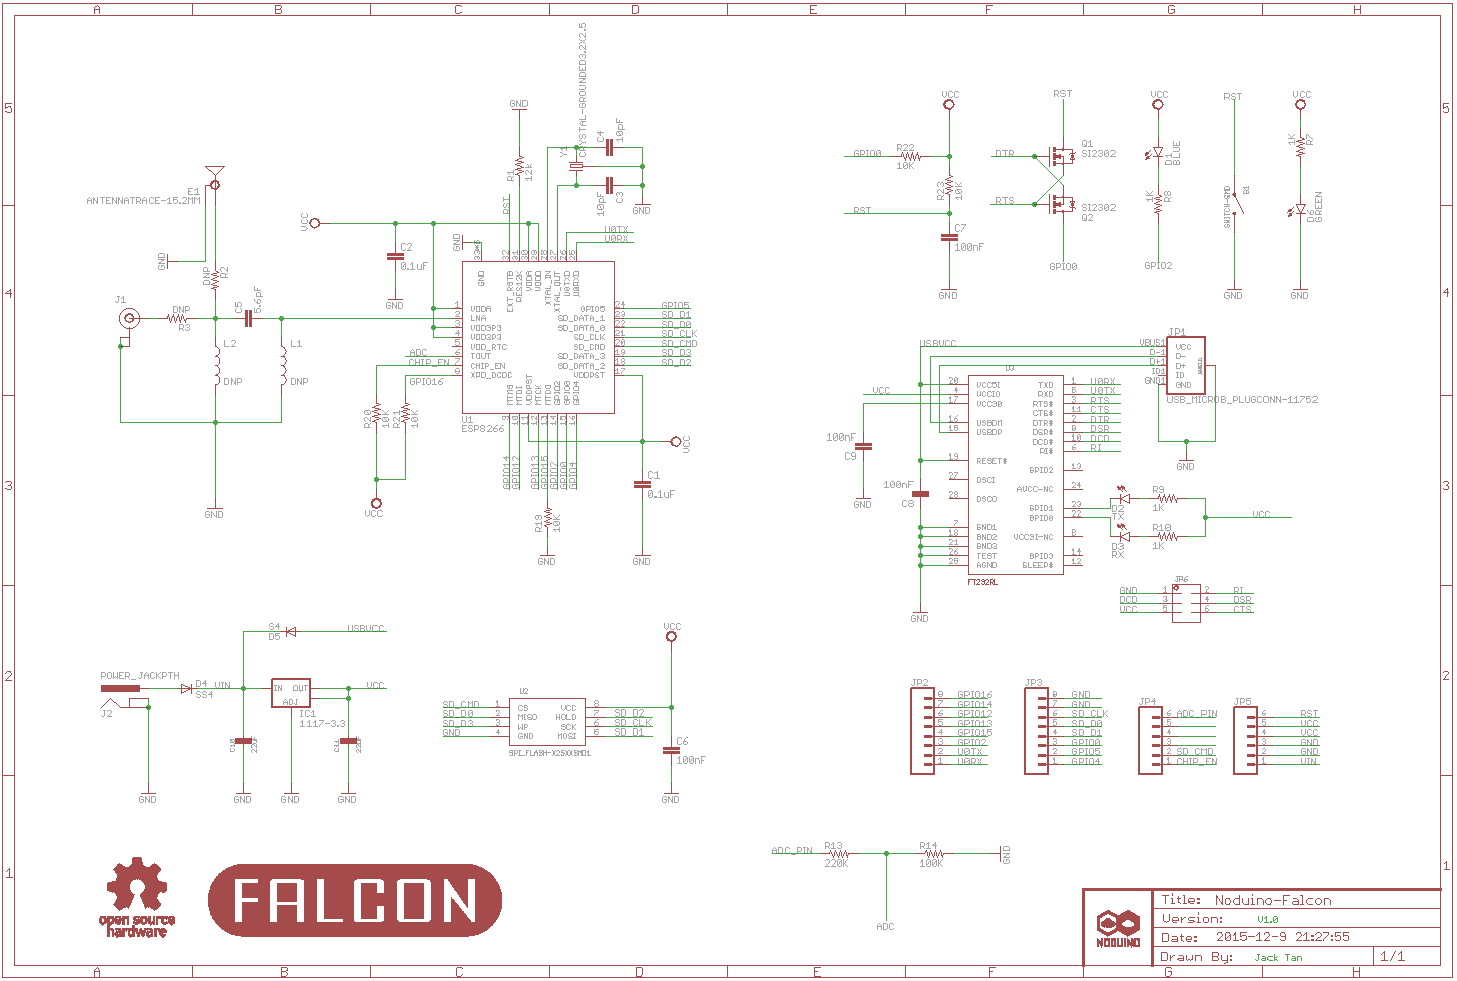 Noduino-falcon-v1.0-sch.png